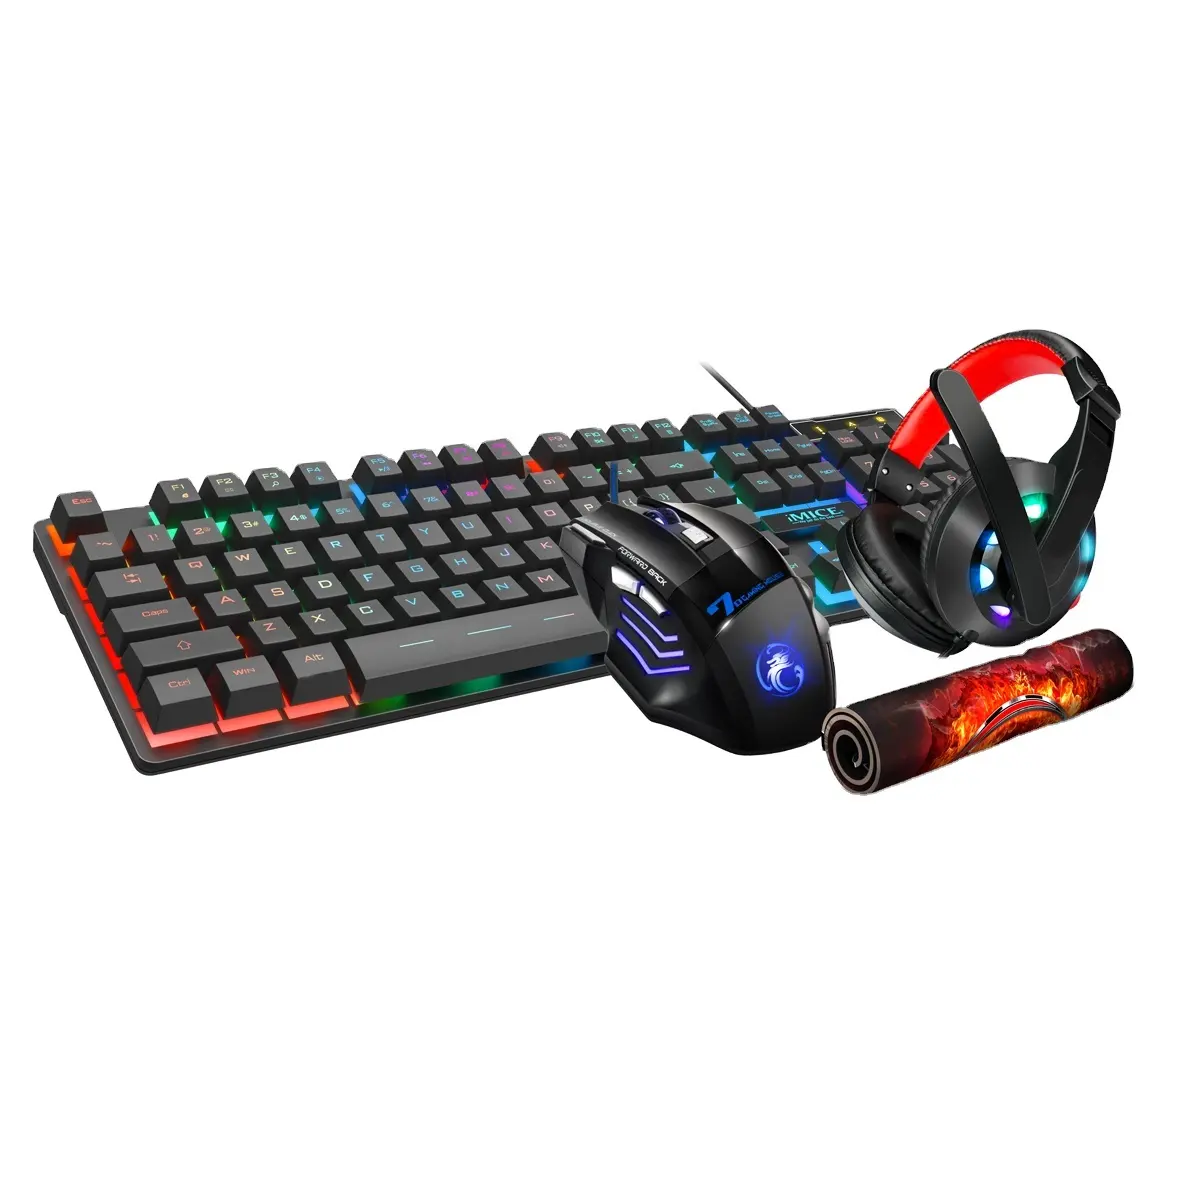 Imice GK-470 teclado semi-mecânico gamer, 4 em 1, ergonômico, colorido, headset e mouse pad